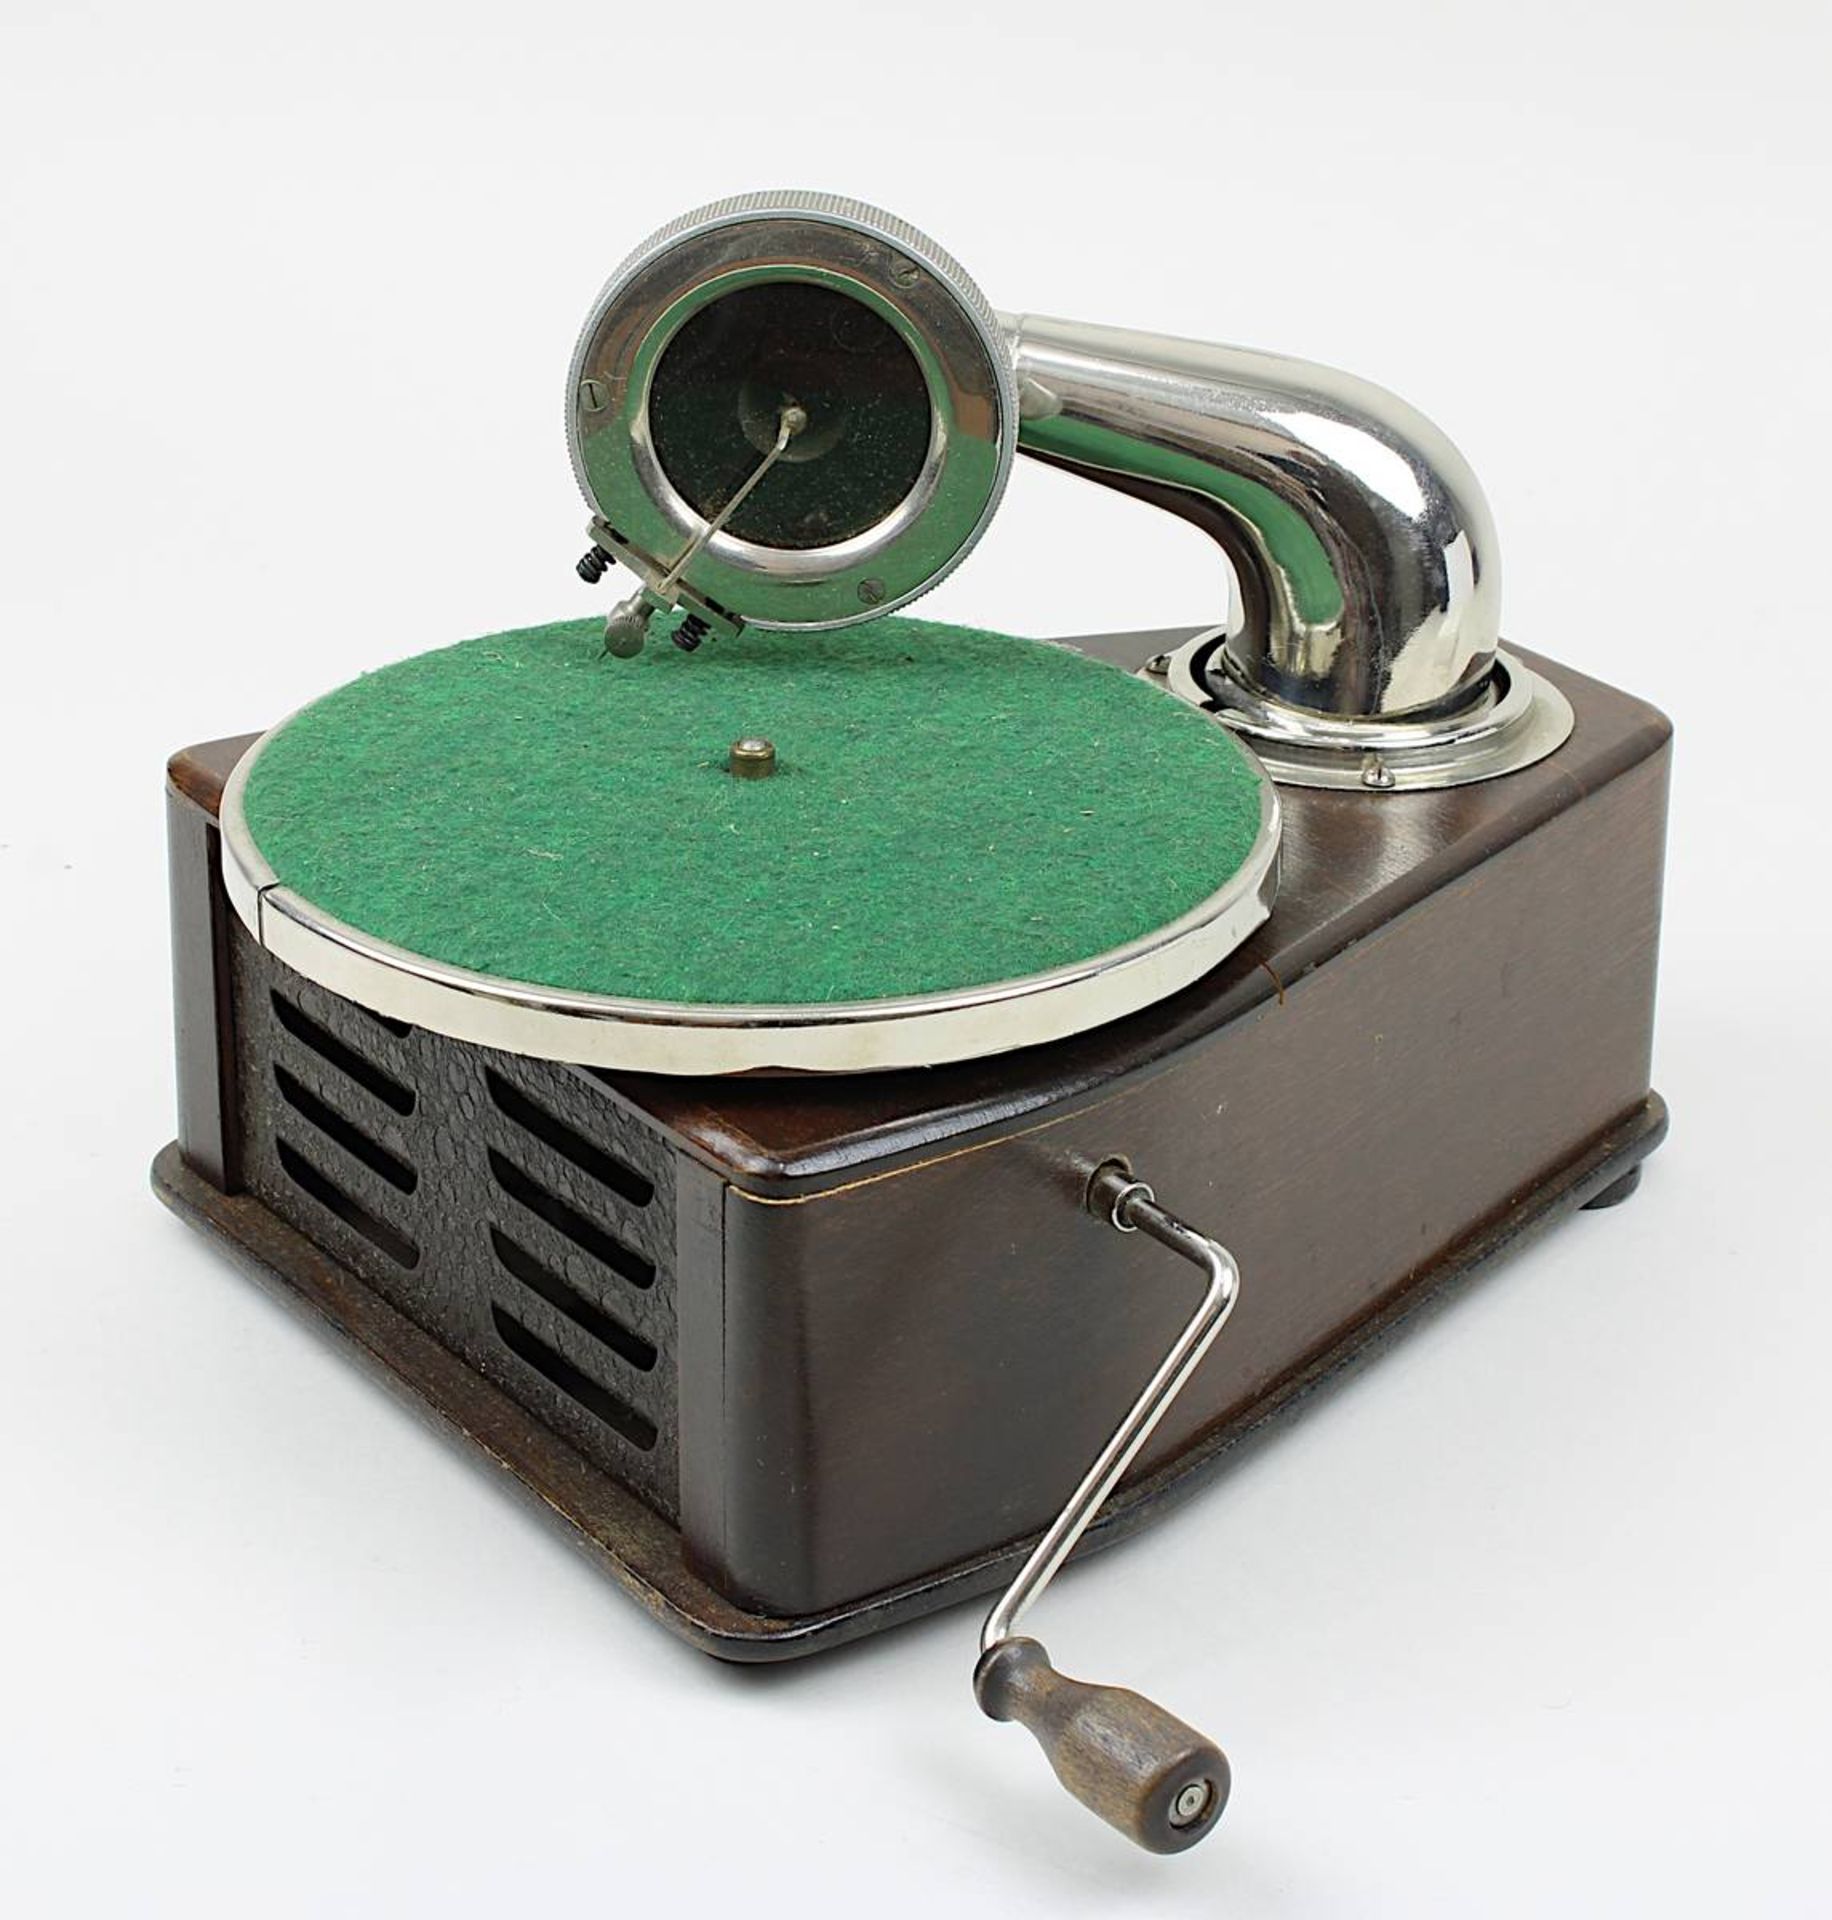 Bing Nürnberg - Kindergrammophon, um 1920, Holzgehäuse, Plattenteller u. Nadelkopf aus